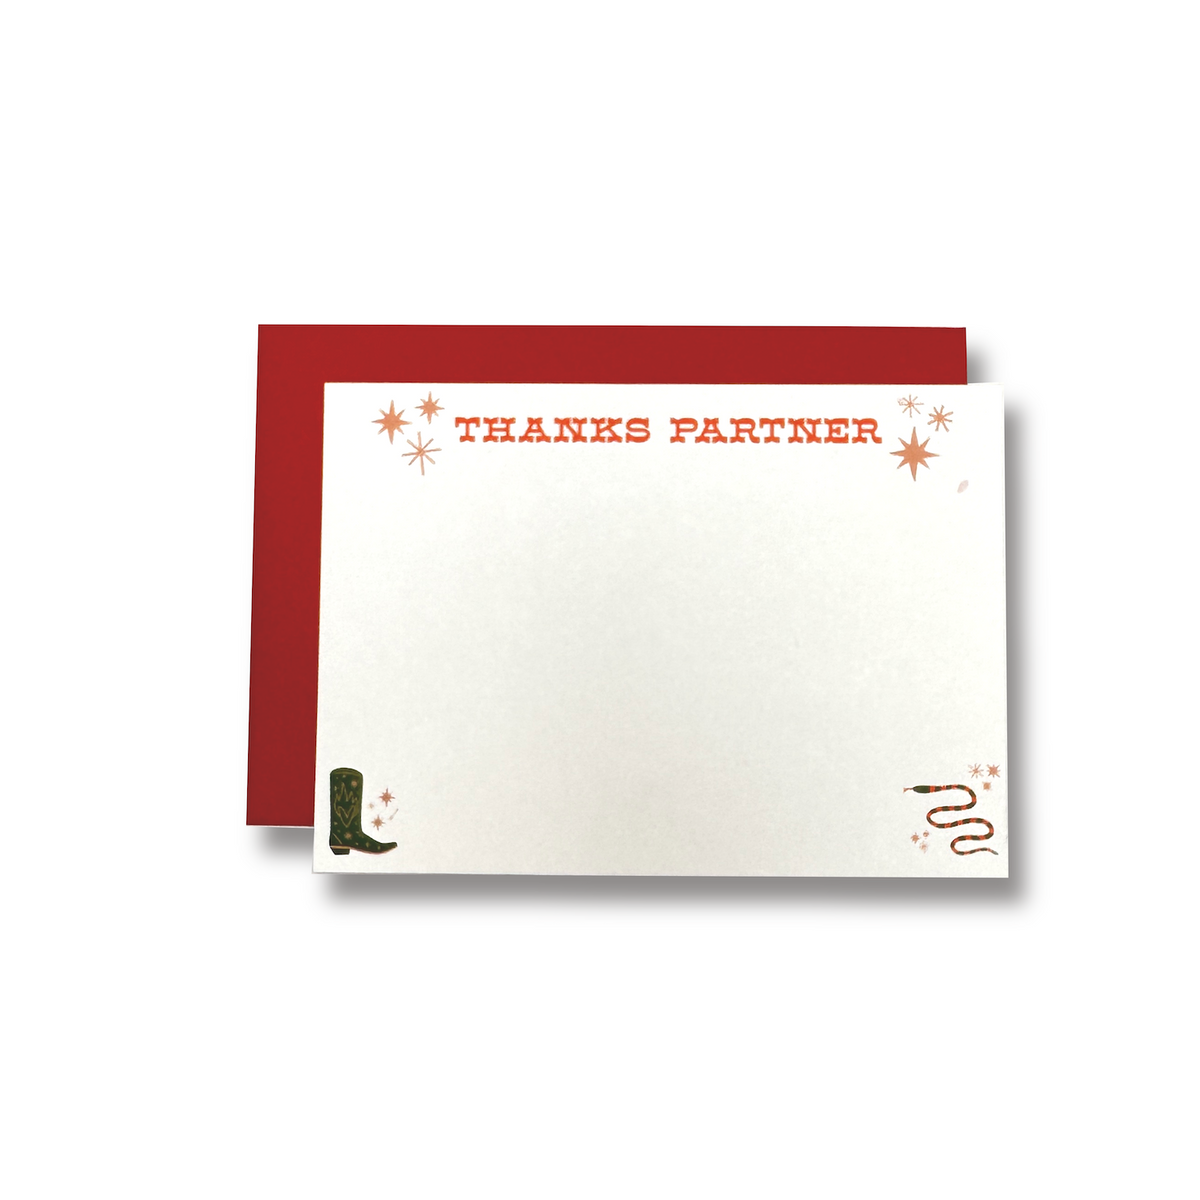 Thanks Partner - Note Card Set